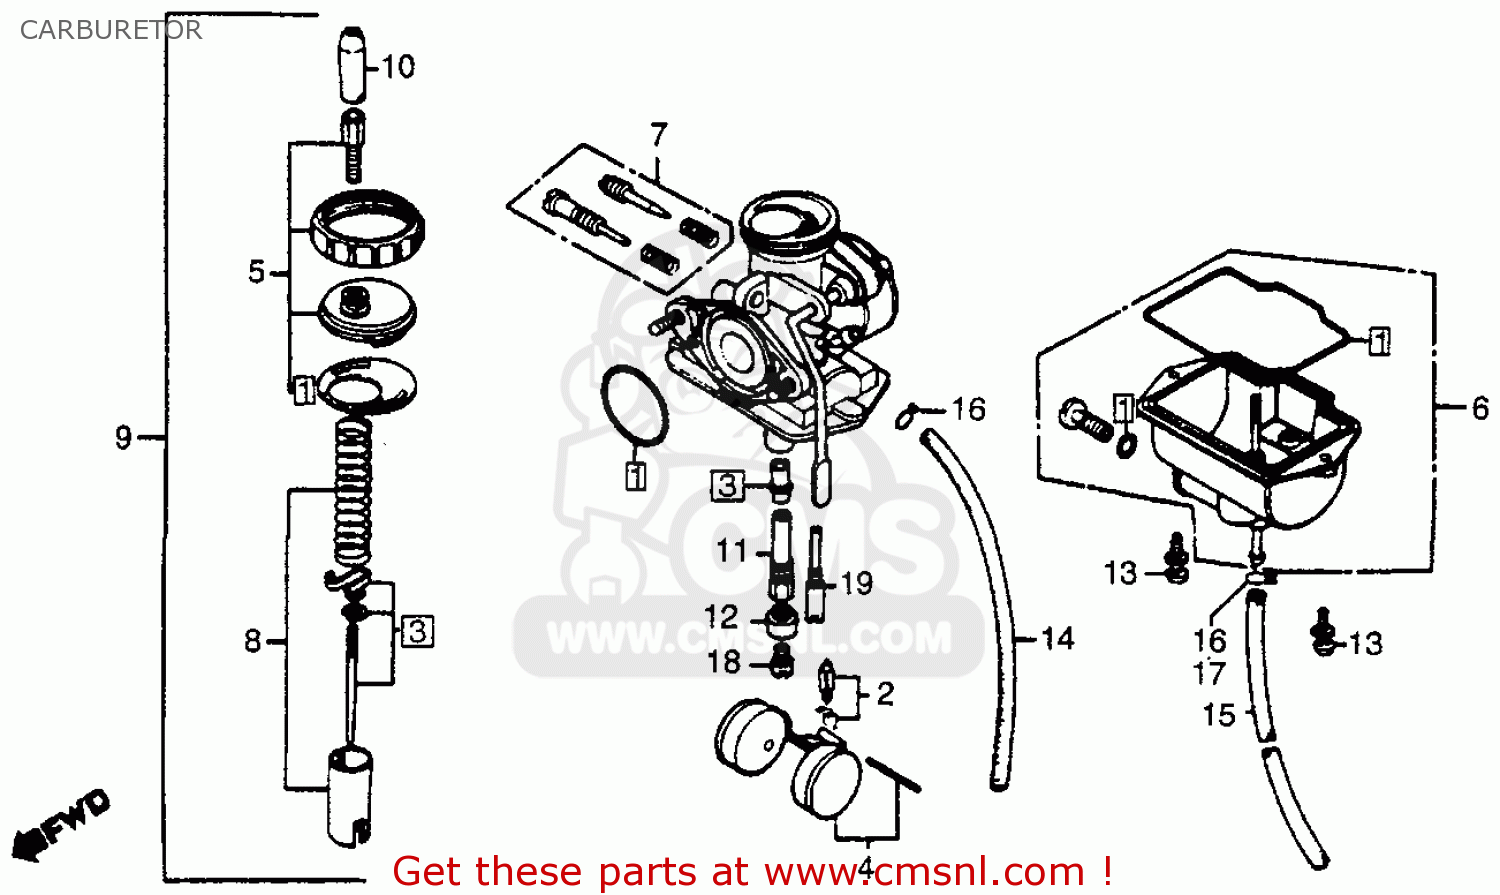 Honda xr80 carburetor settings